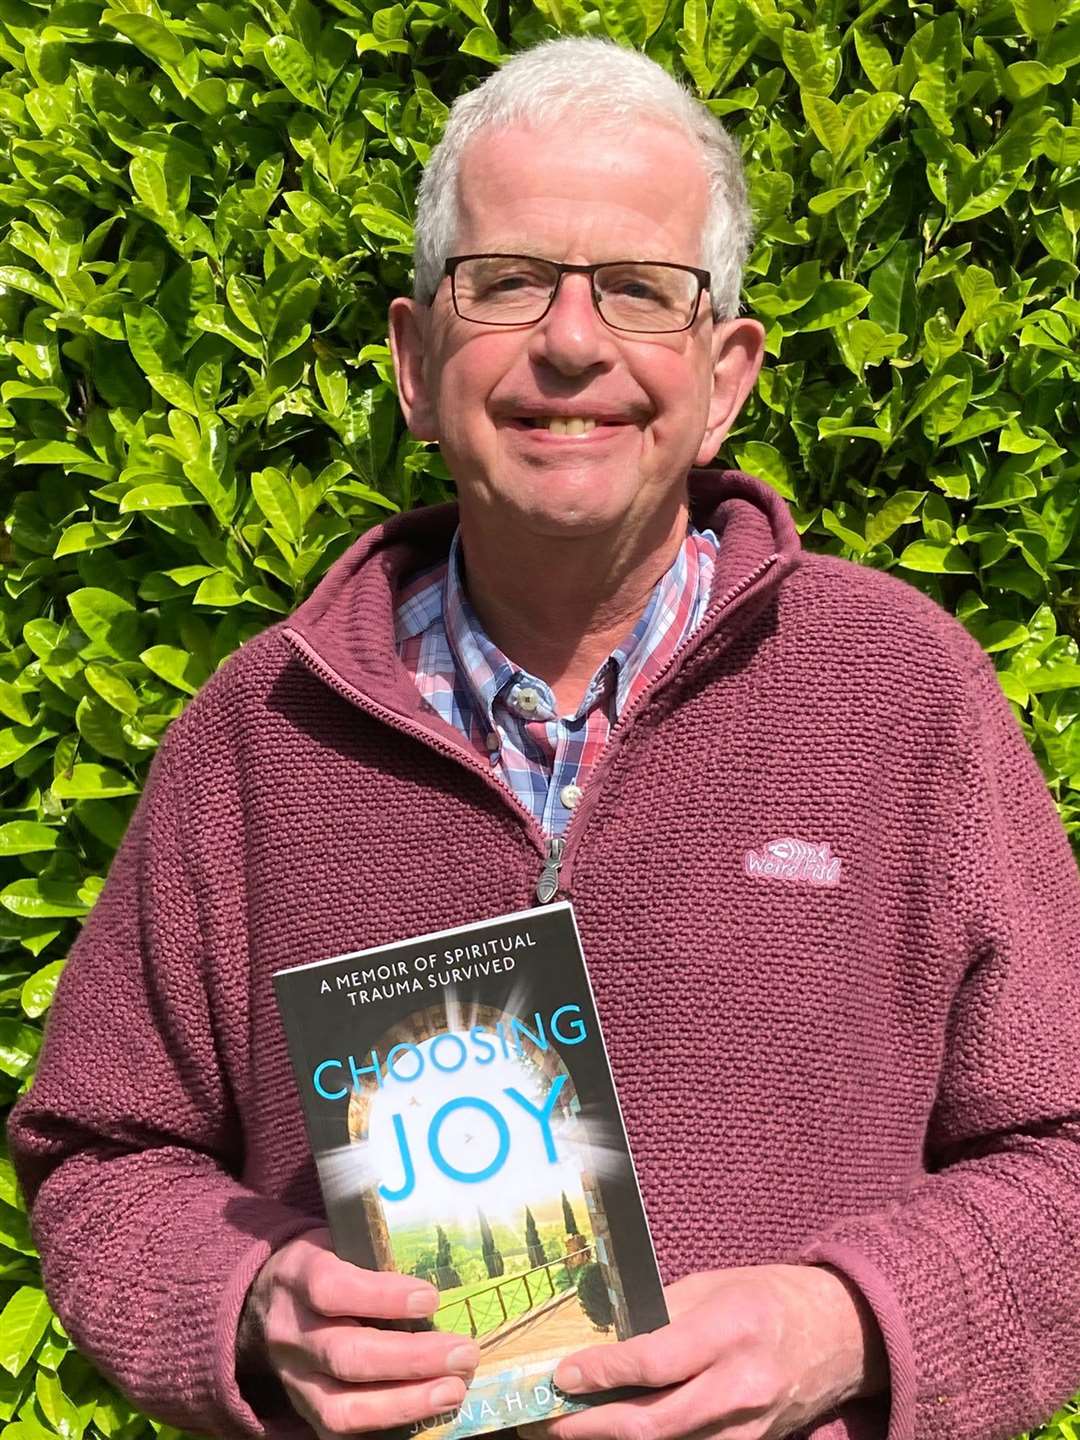 John with a hard copy of his book, Choosing Joy.